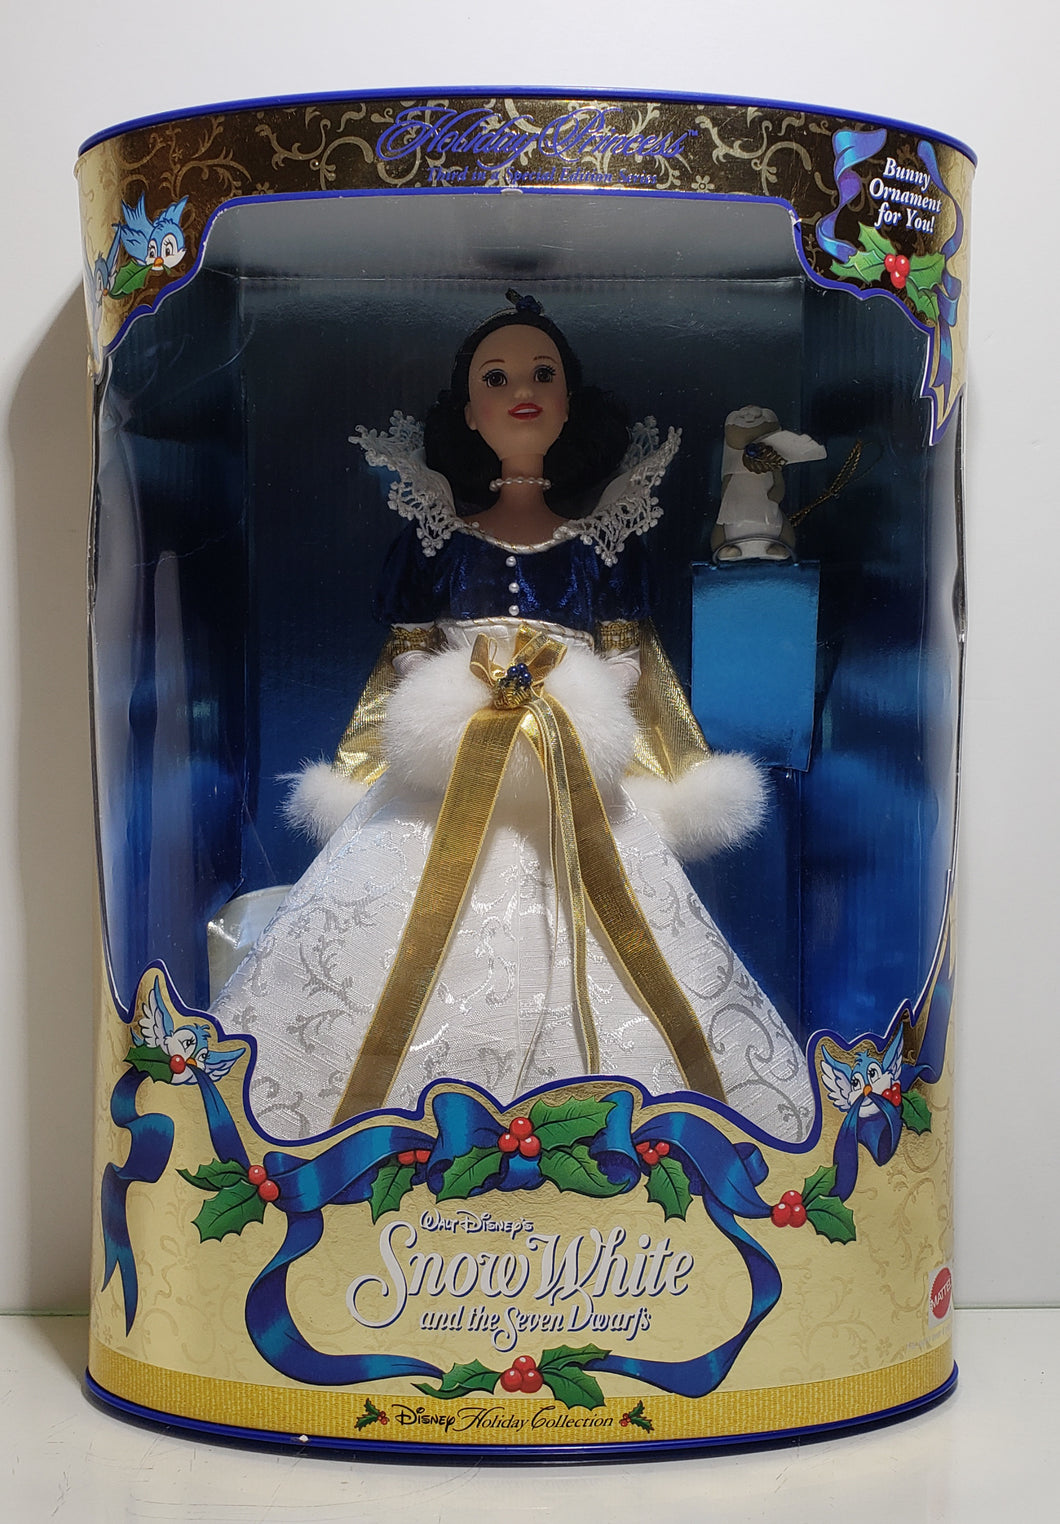 Mattel Disneys Snow White Holiday Princess Barbie